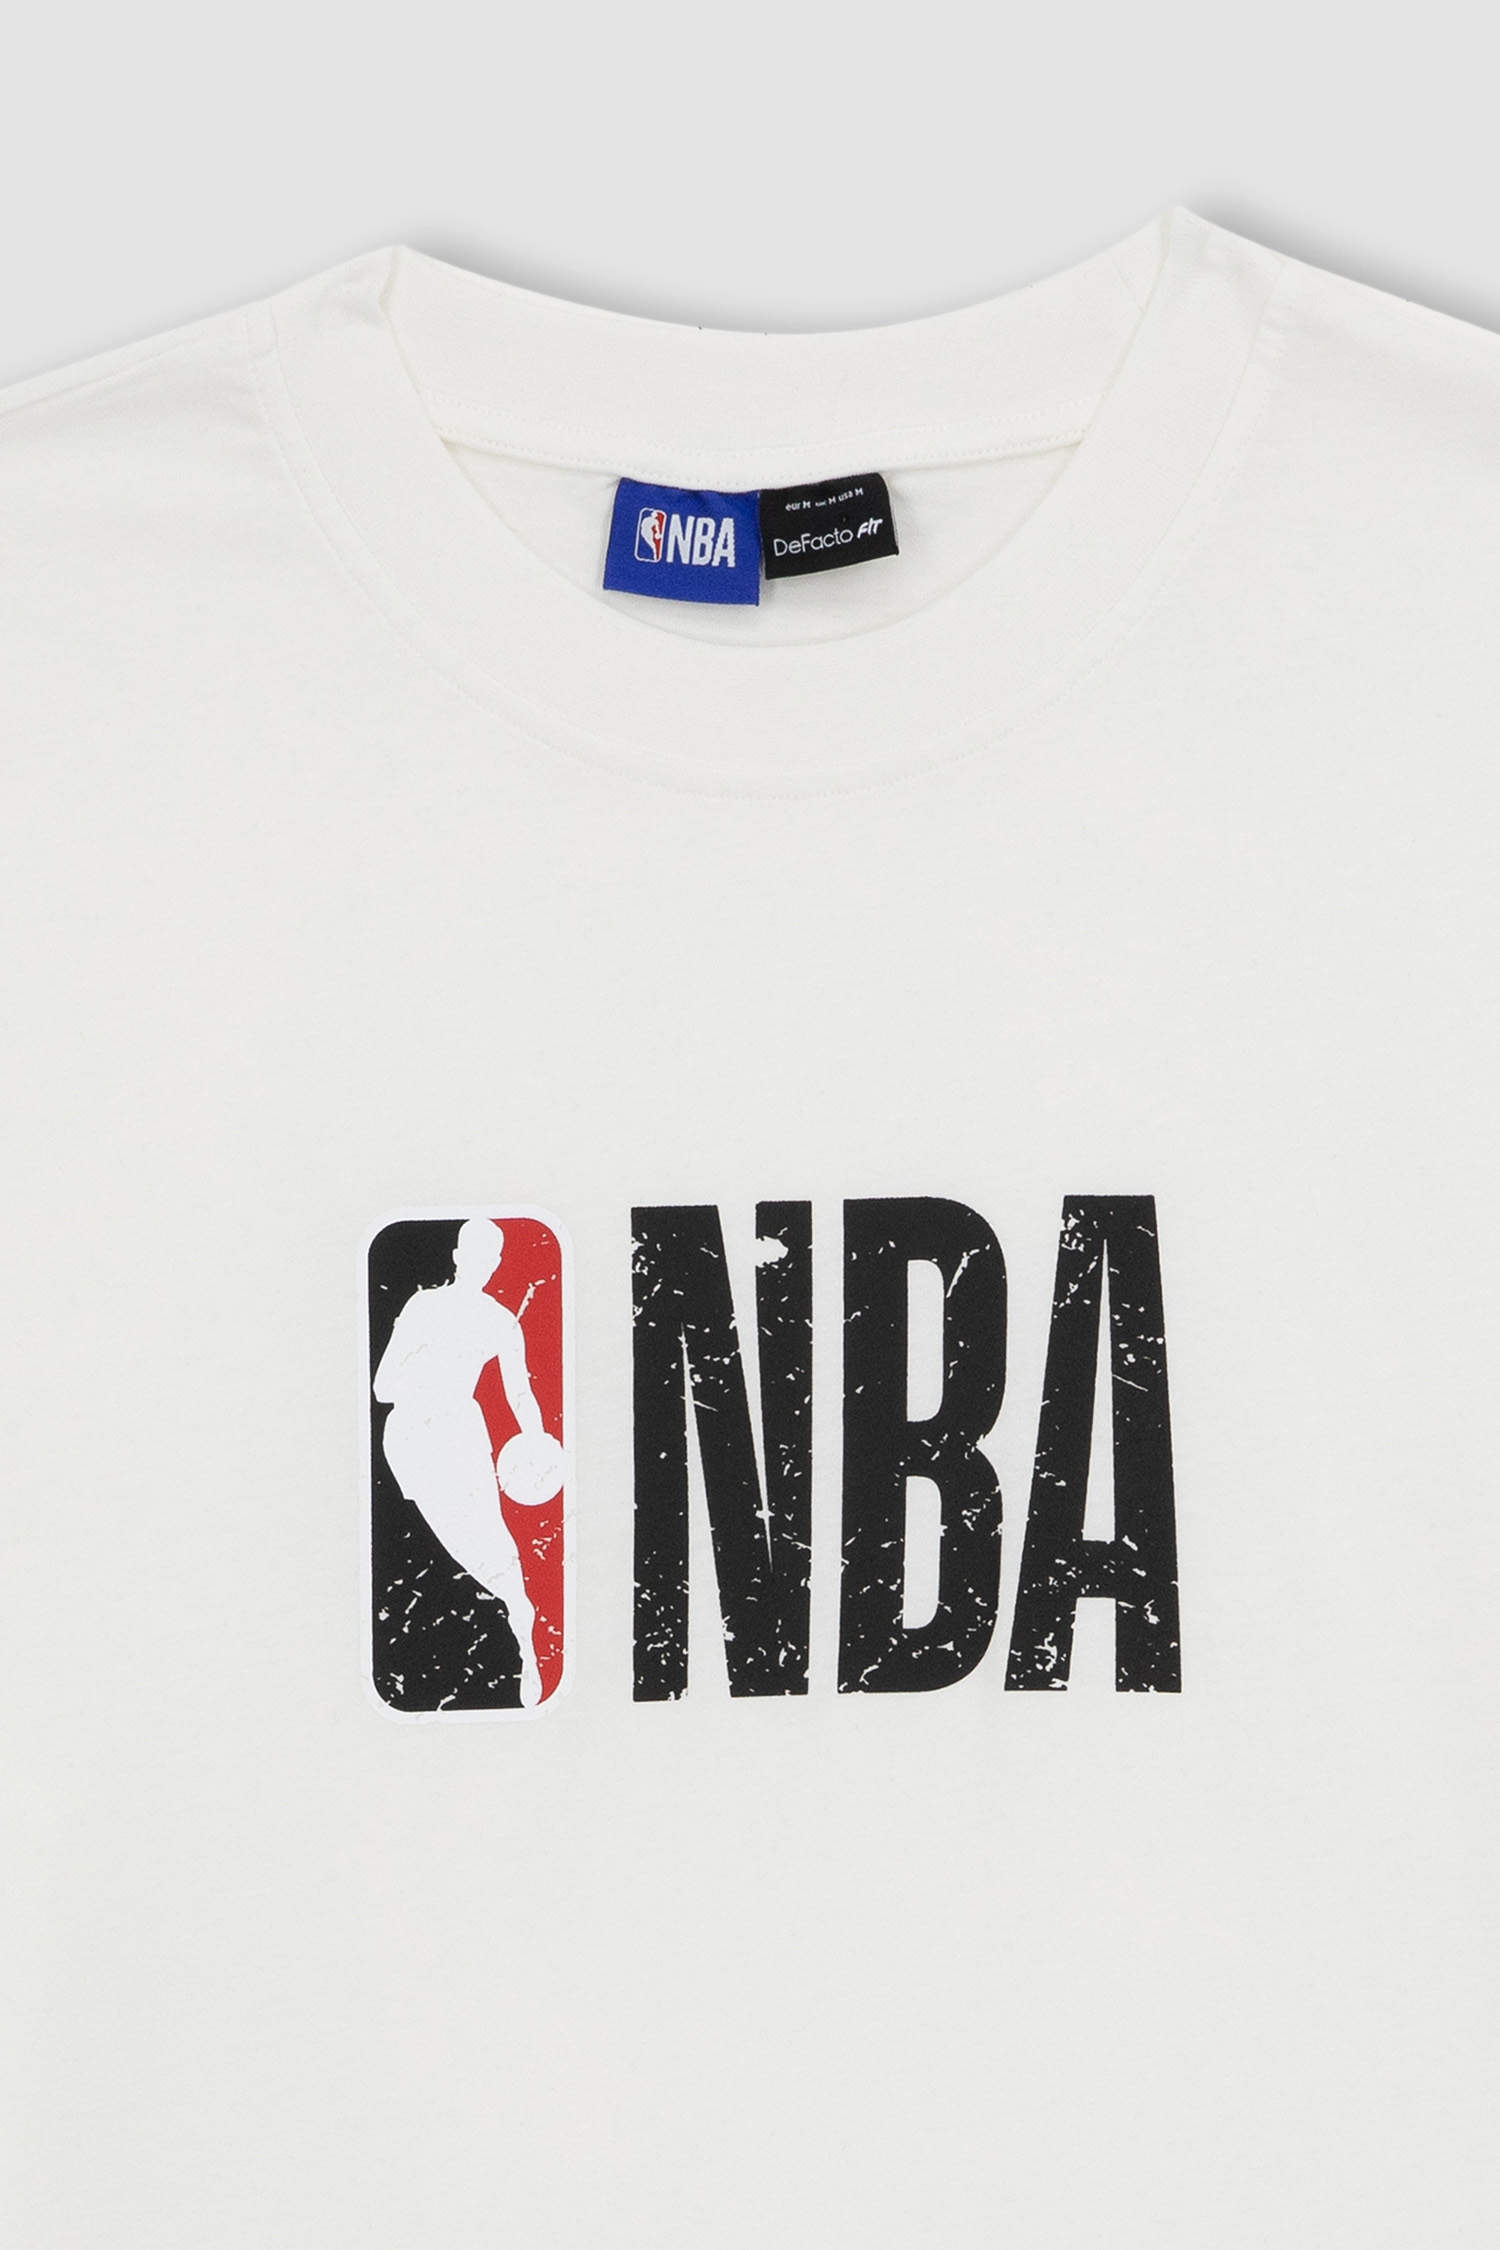 Active Nba Logo T-Shirt